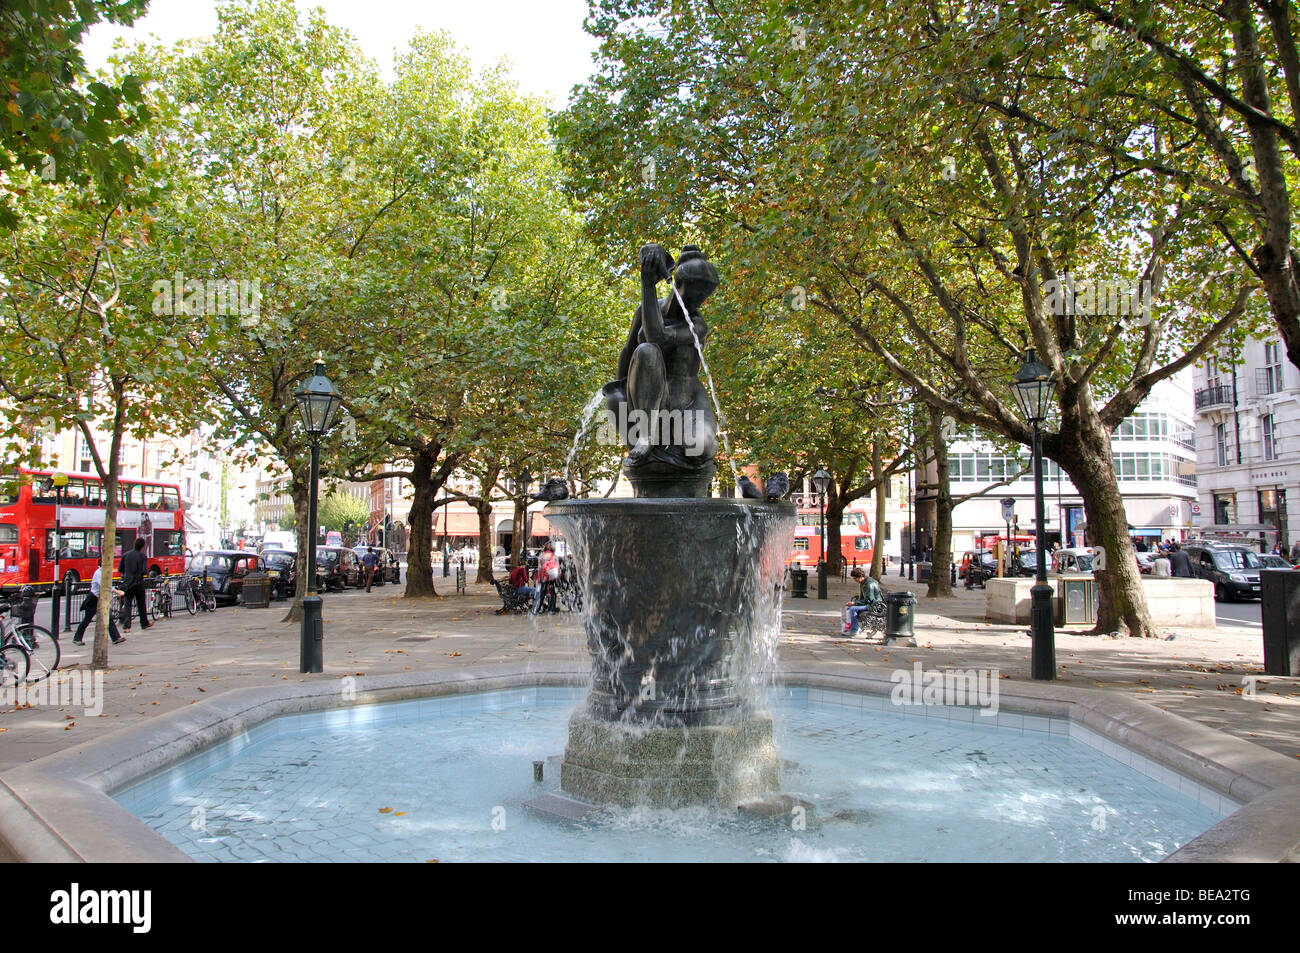 The 'Venus' fountain in Sloane Square, Chelsea, Royal Borough of Kensington and Chelsea, London, England, United Kingdom Stock Photo